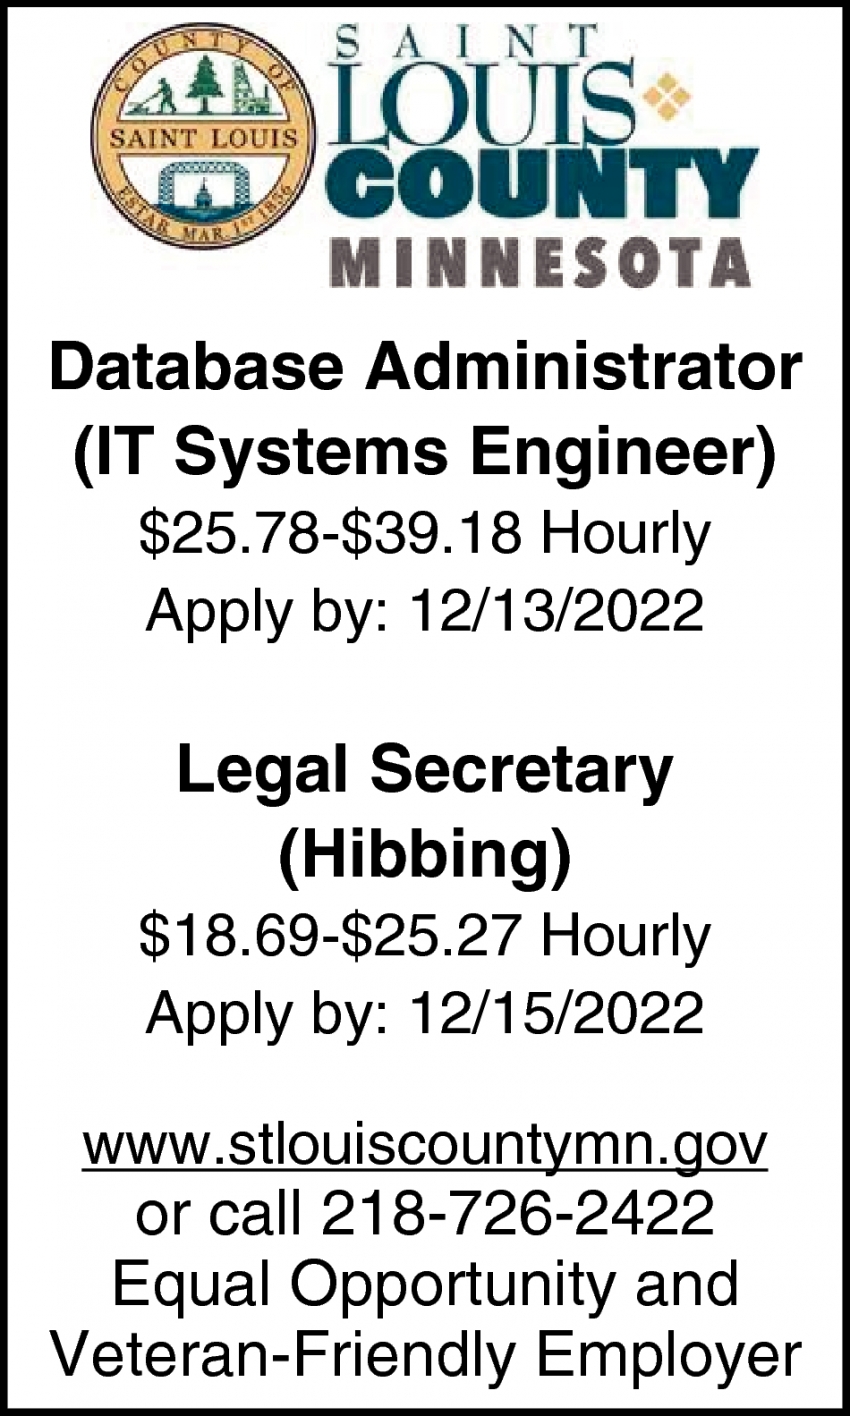 Database Administrator, Legal Secretary